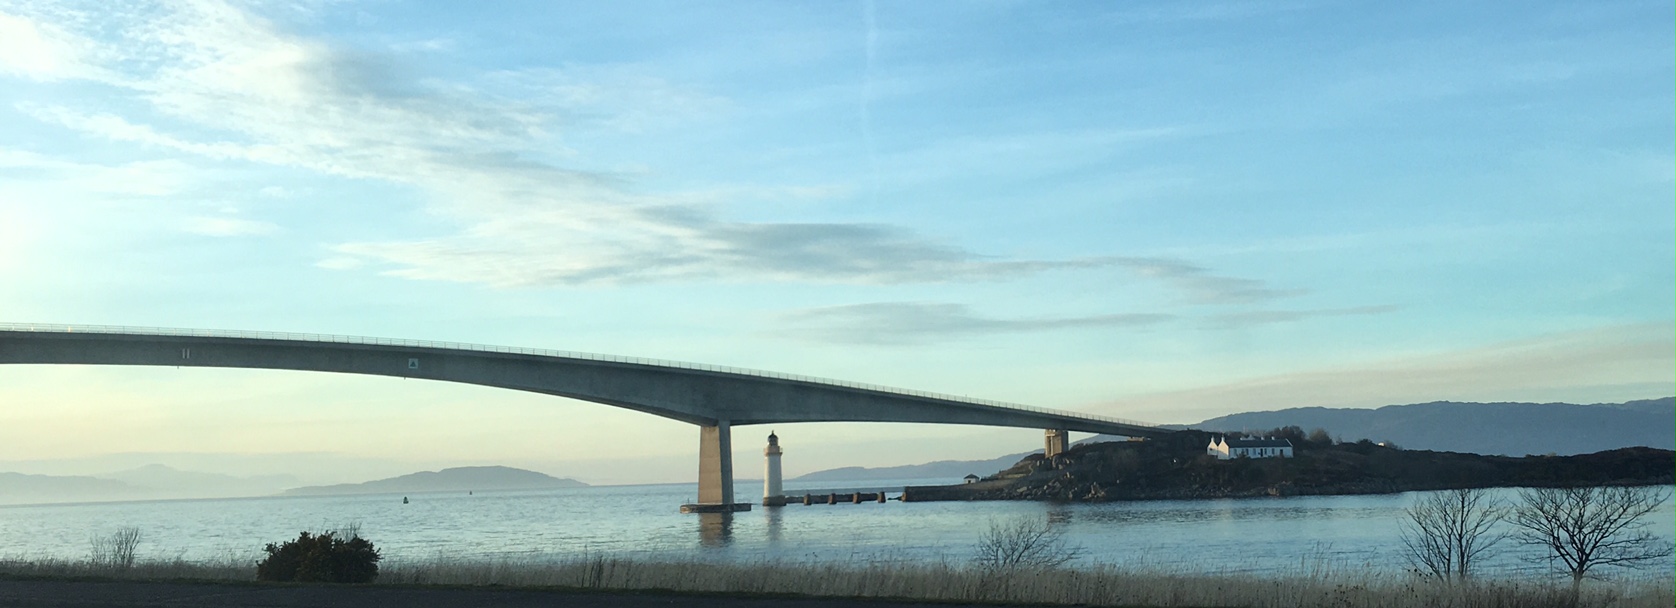 A concrete bridge over a body of water.